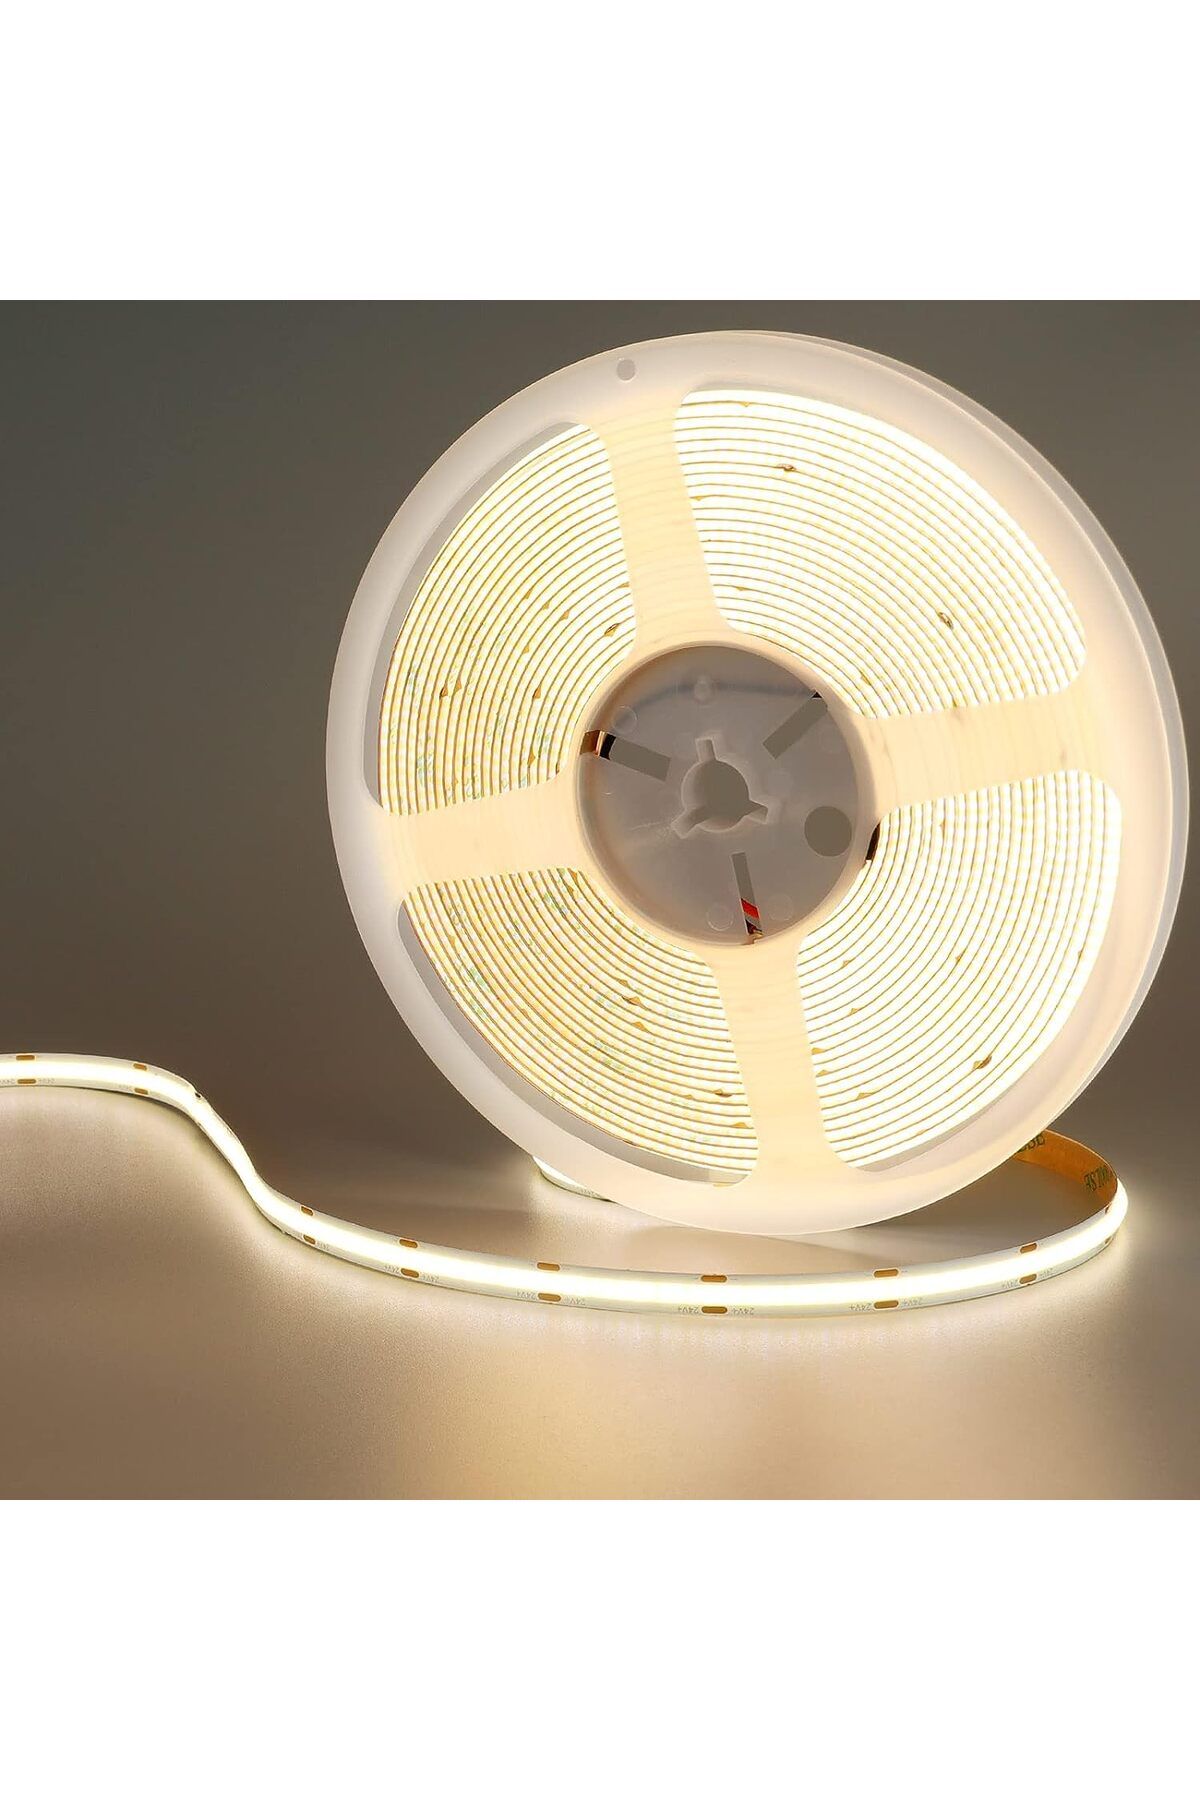 Hapşuruk COB LED şerit 24 V 10 m Doğal beyaz, 4000 K LED şerit, CRI 93 + yüksek parlaklık, 6800 lm IP20